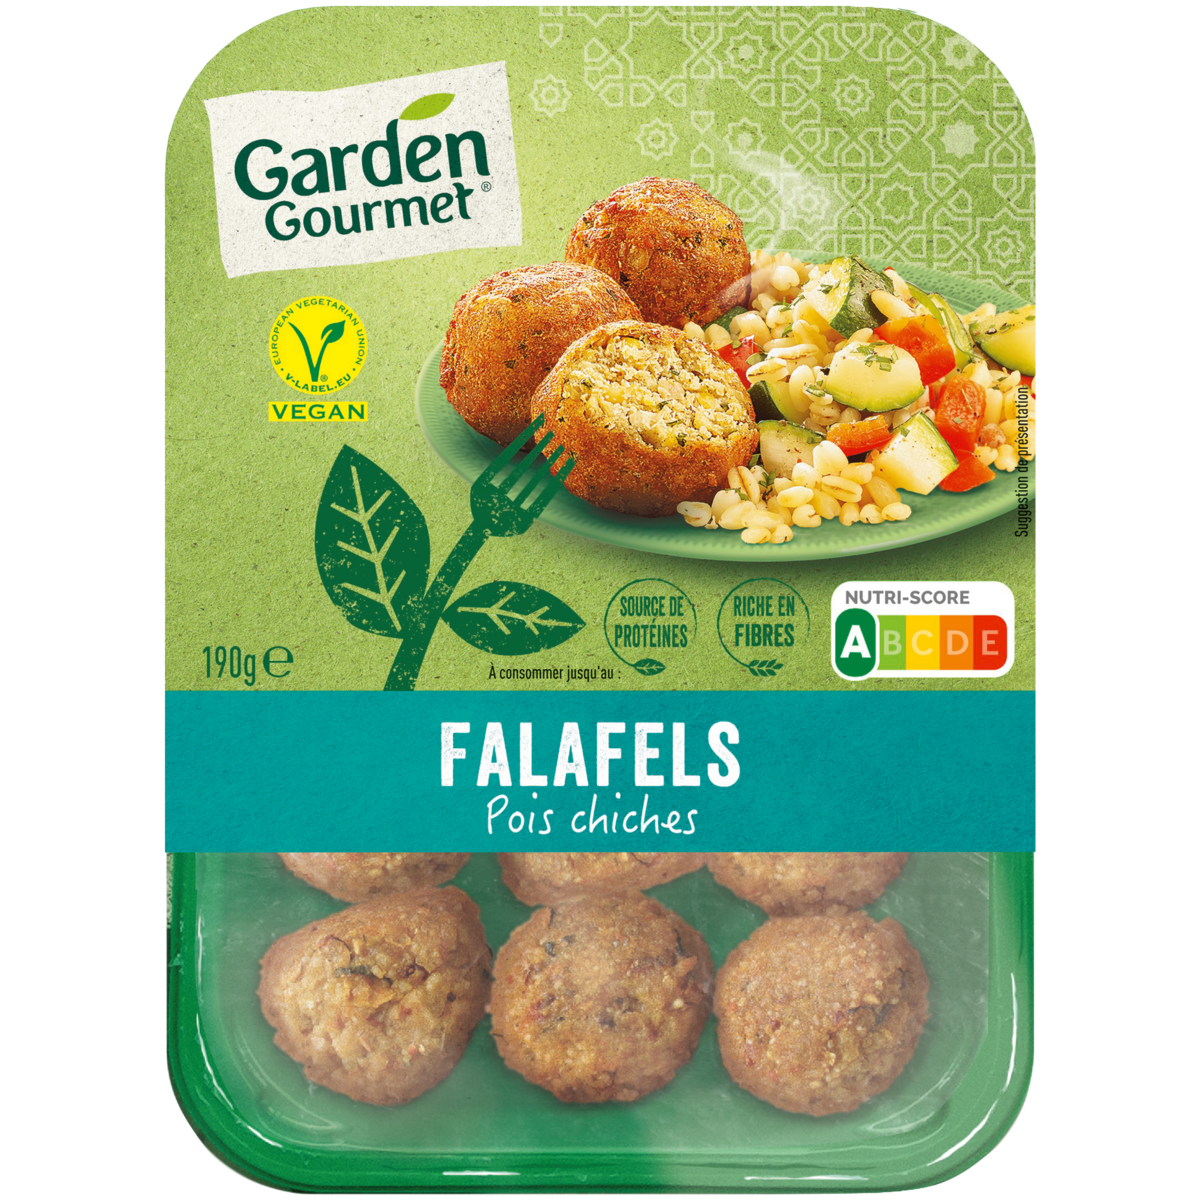 GARDEN GOURMET Végétal Falafels Pois chiches 190 g